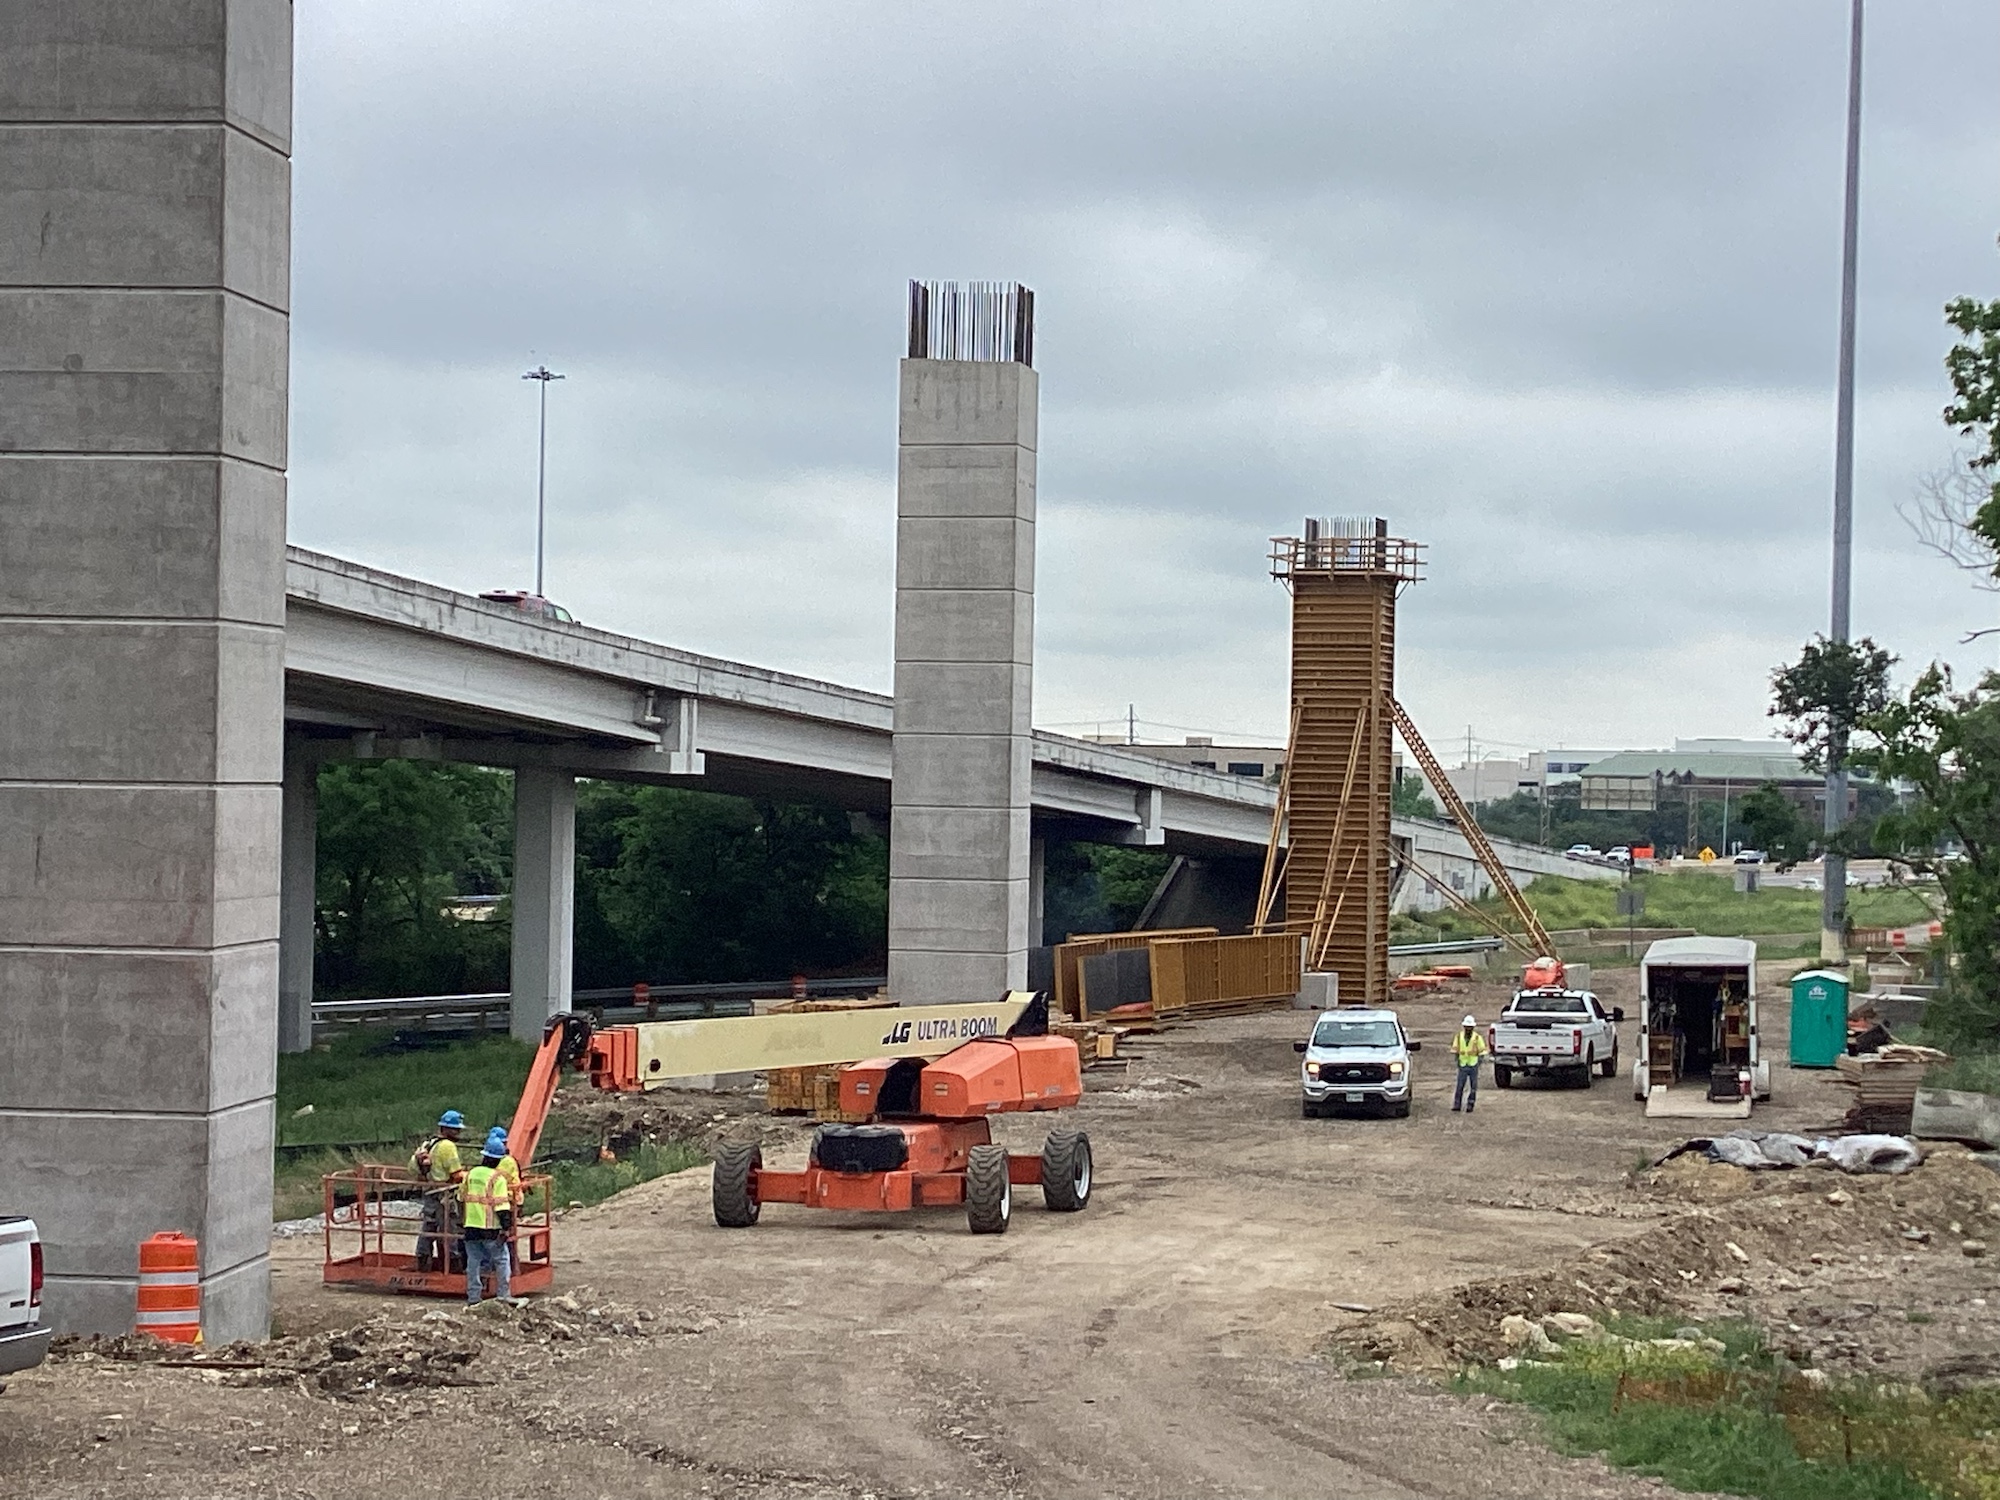 Bridge connecting 183 Toll lanes to Mopac Toll lanes - Column work in progress